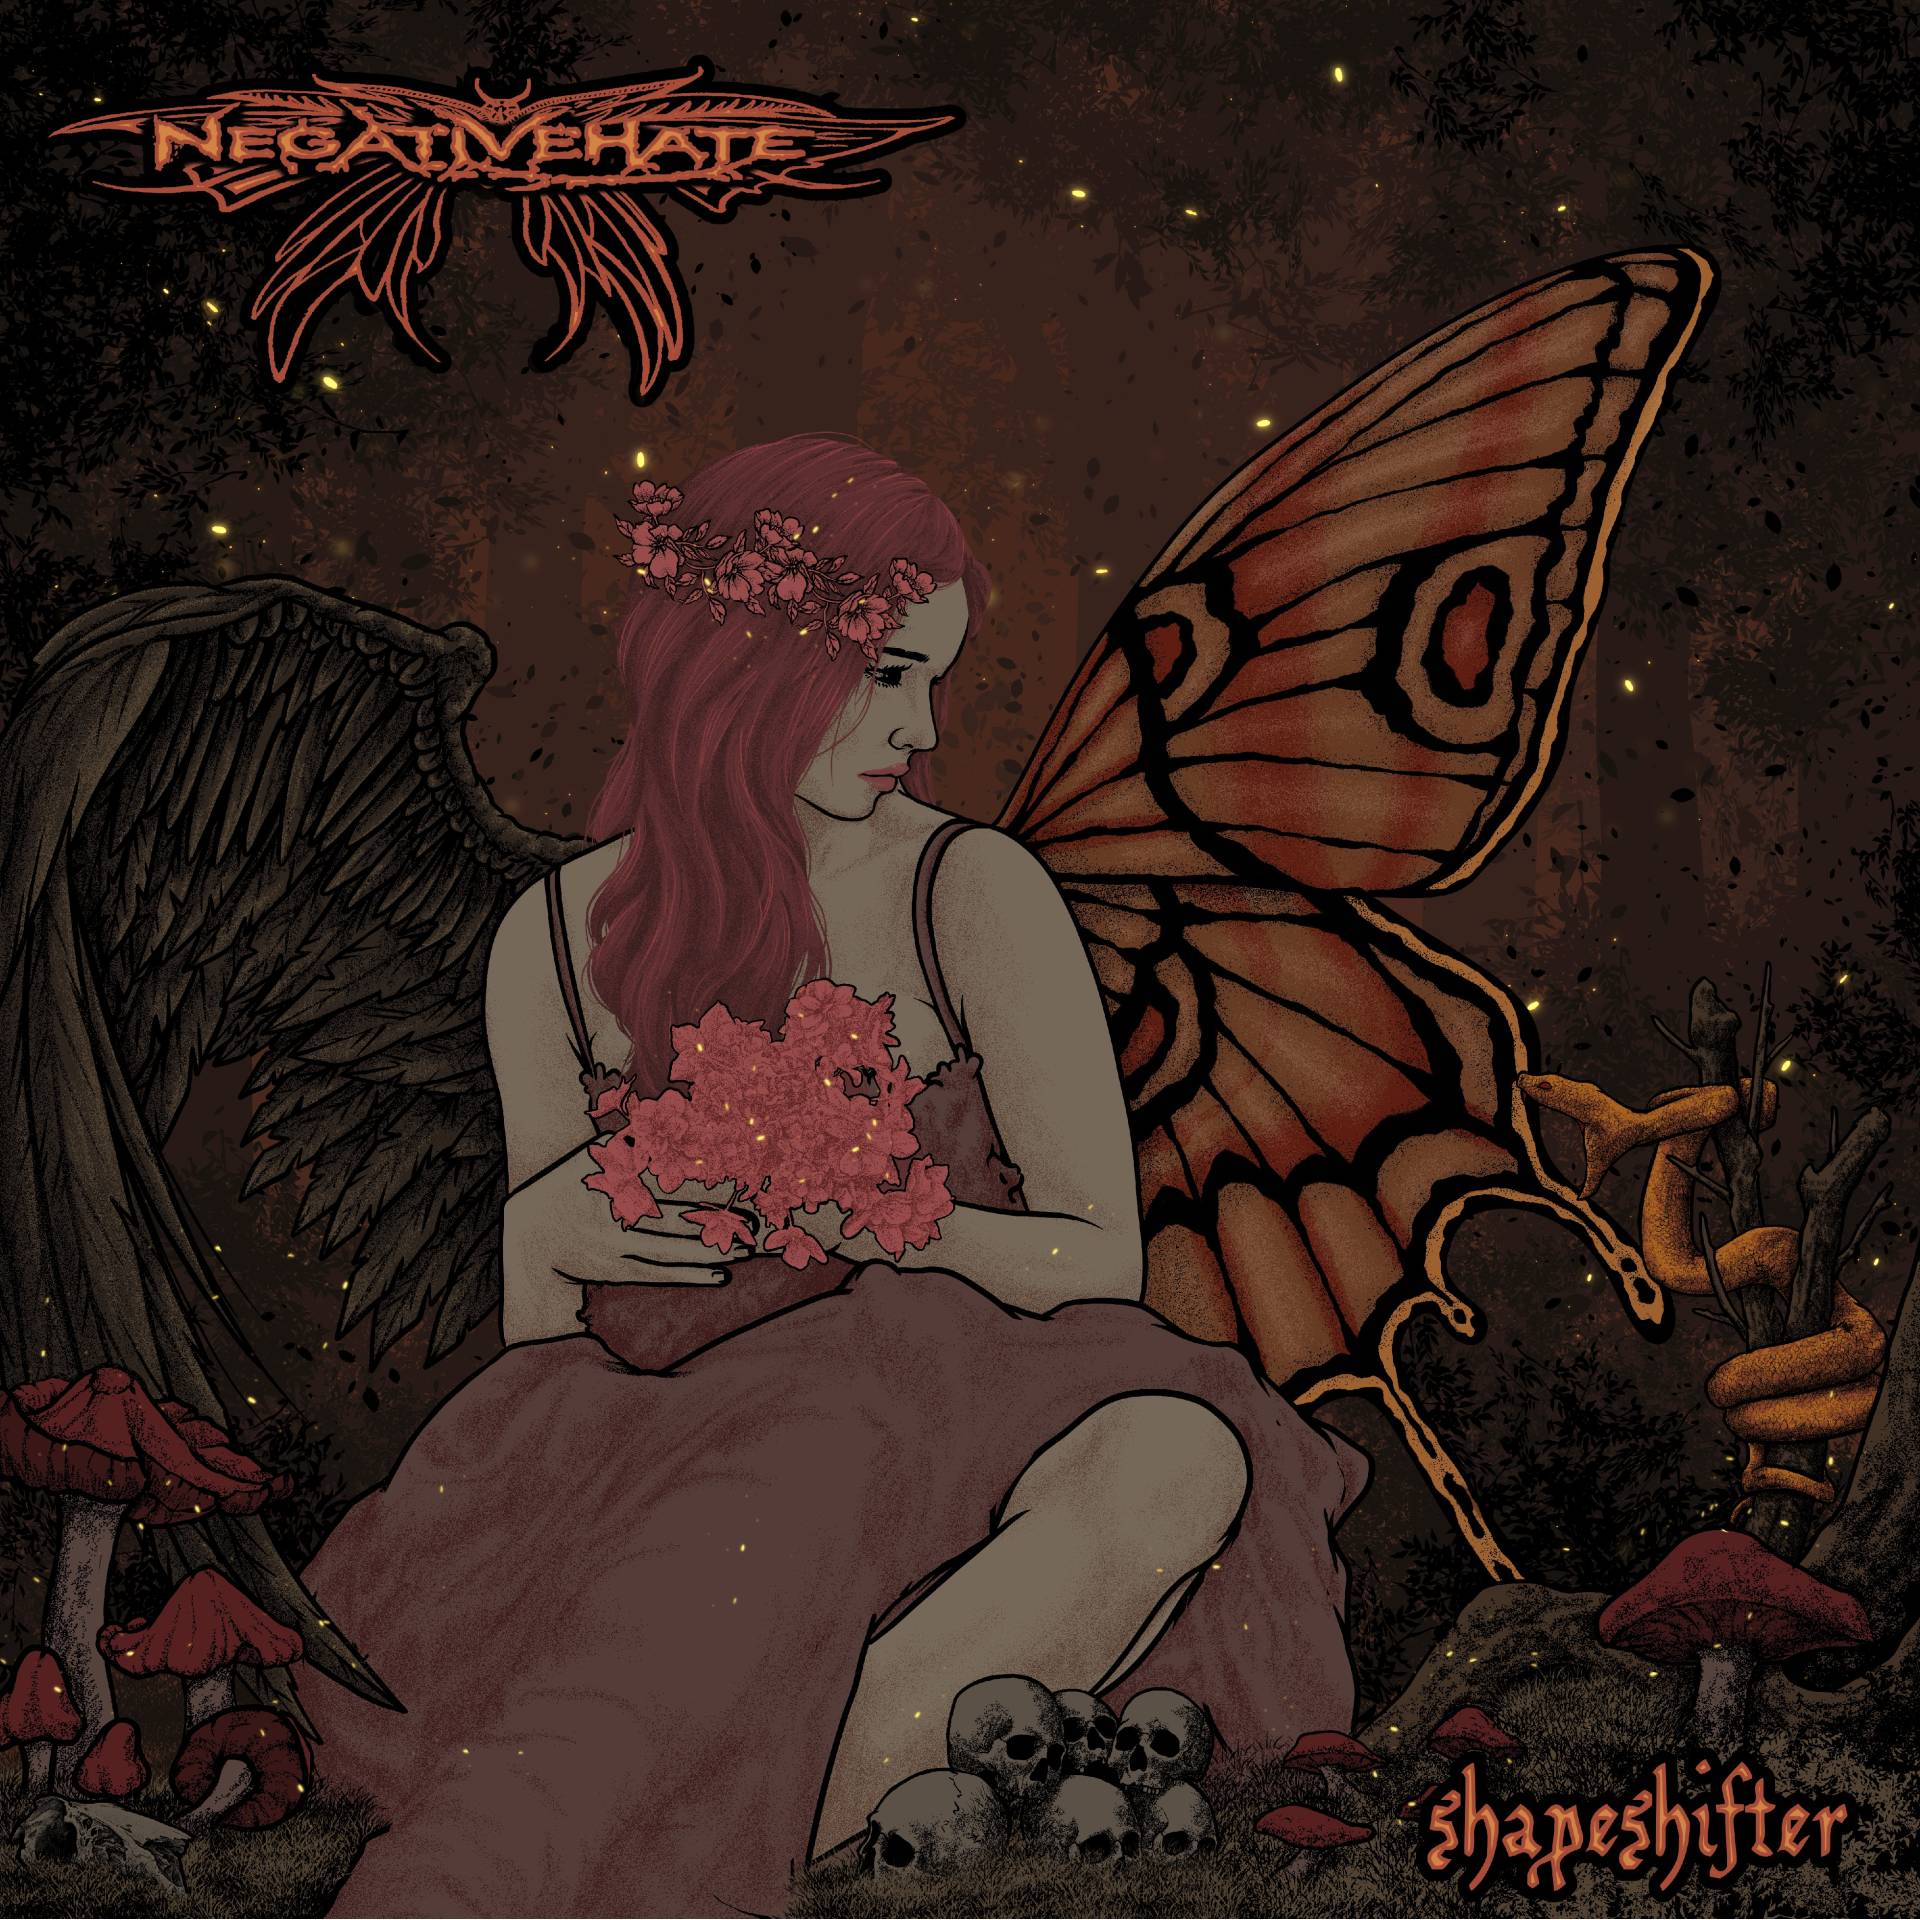 Negativehate ‘Shapeshifter’ album artwork